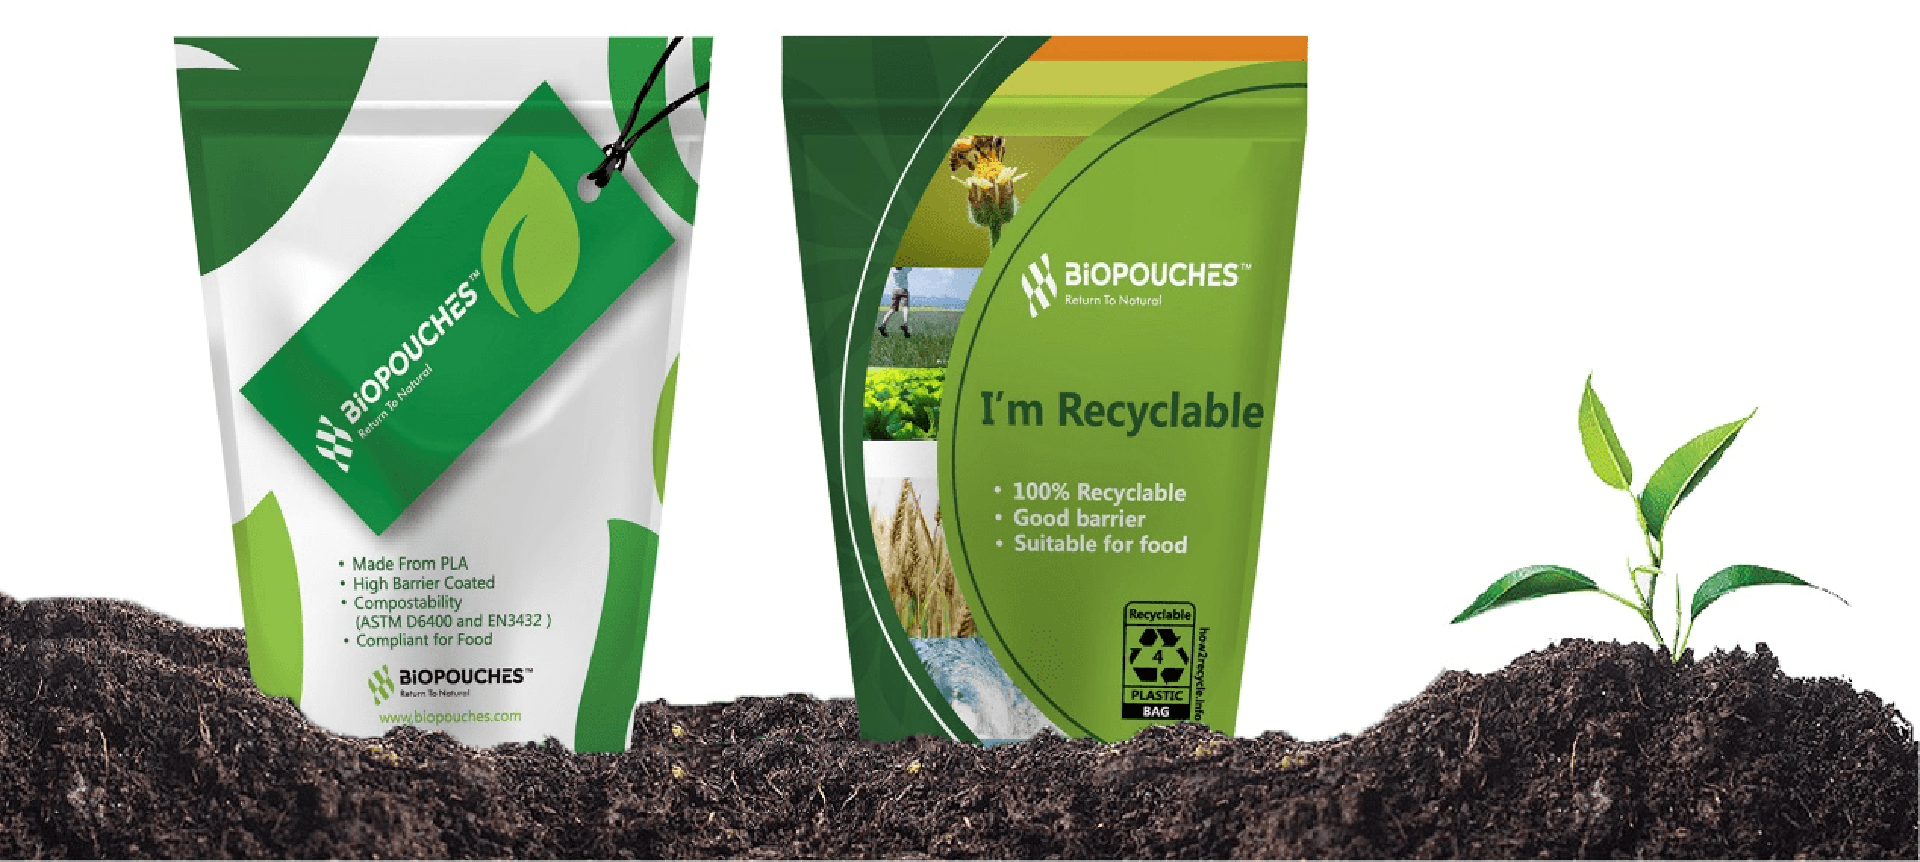 Vexillum compostable packaging1